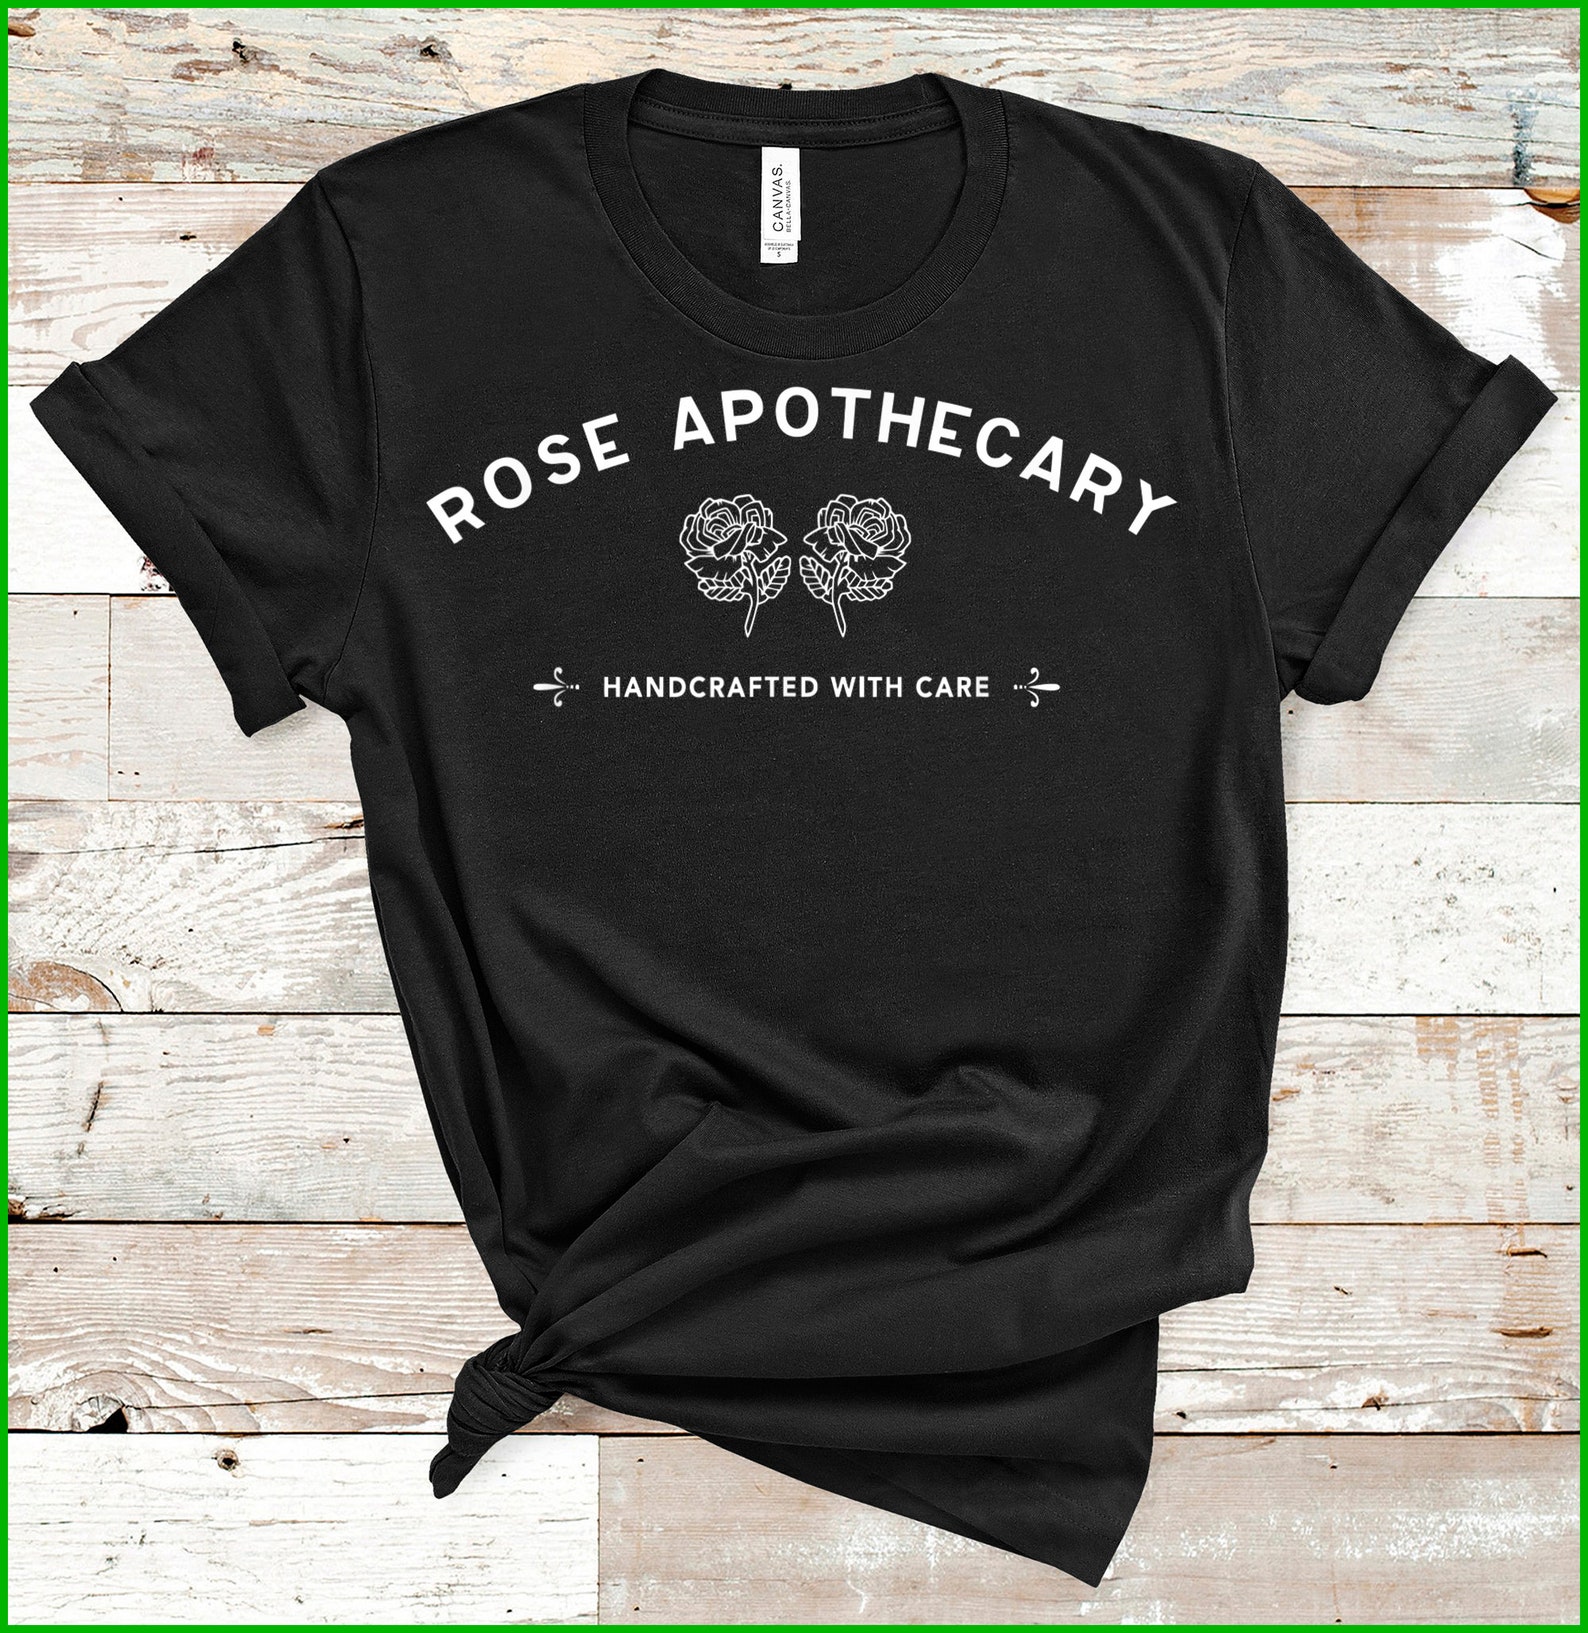 Rose-Apothecary T-Shirt | Etsy